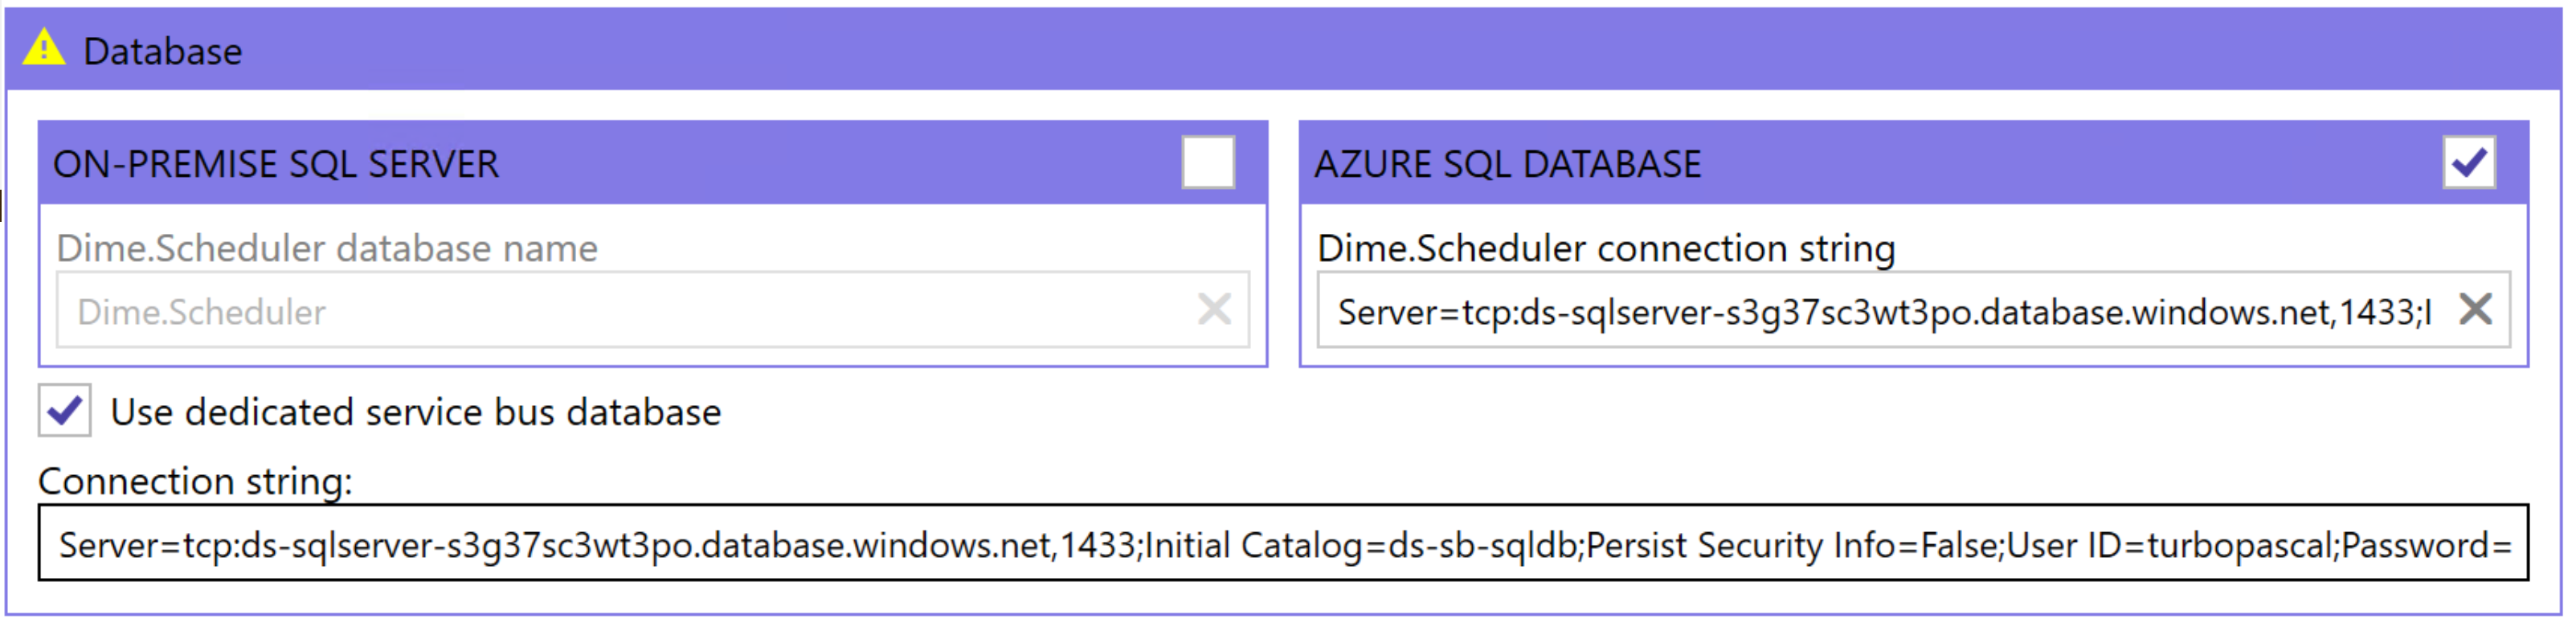 Azure SQL configuration